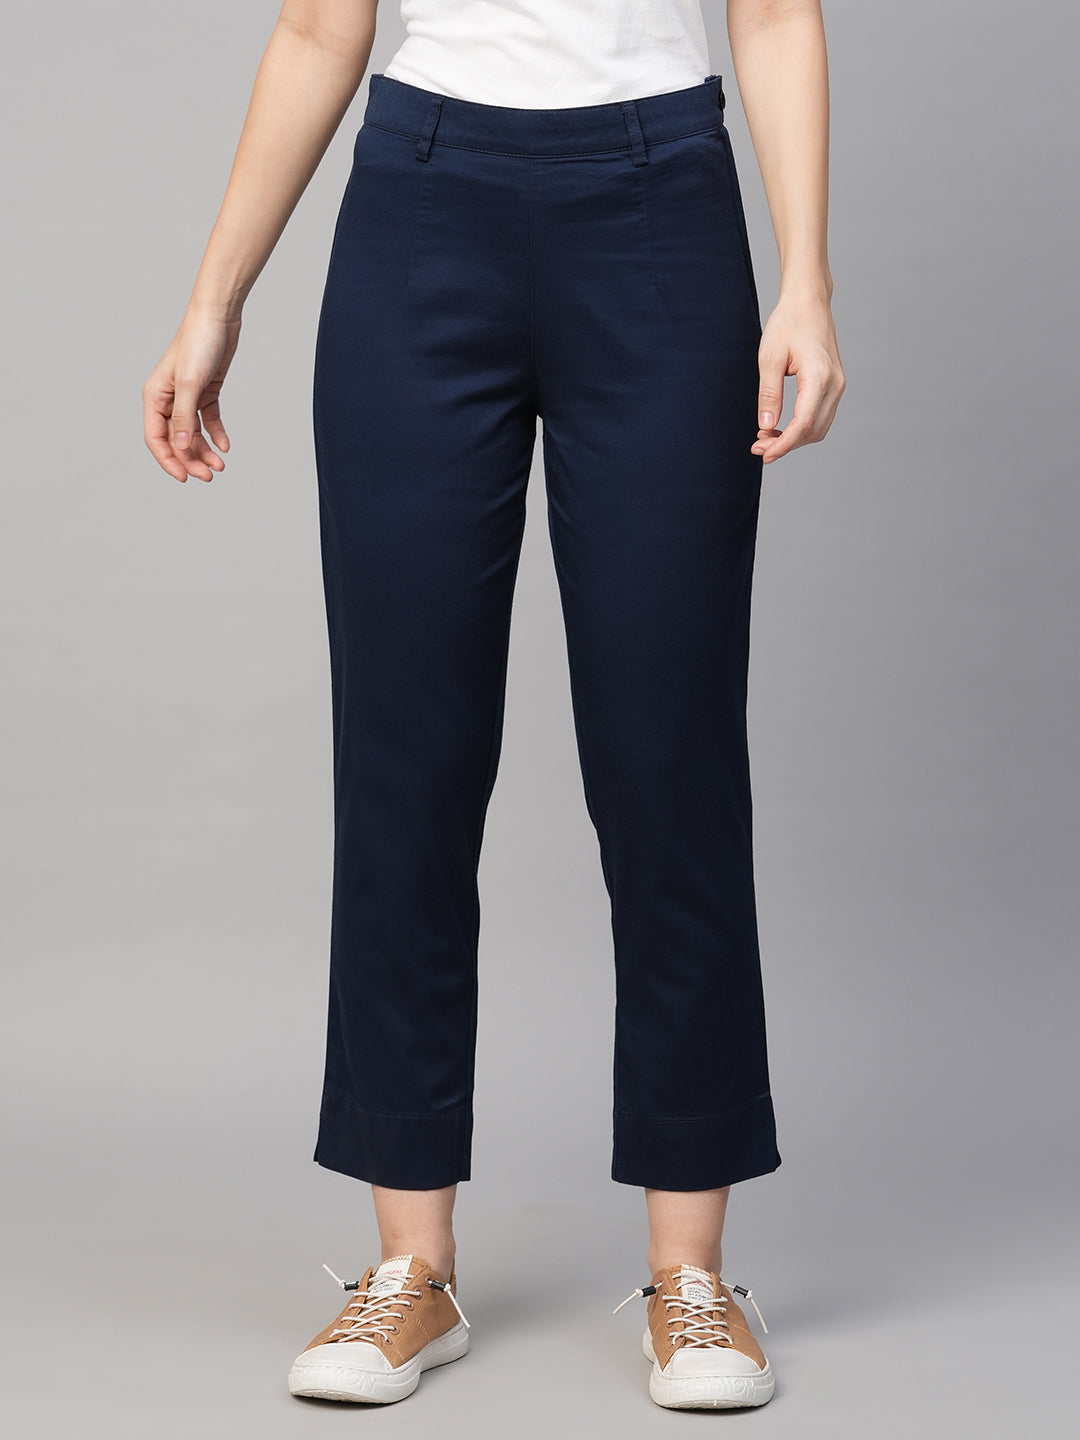 Women's Navy Cotton Elastane Regular Fit Pant